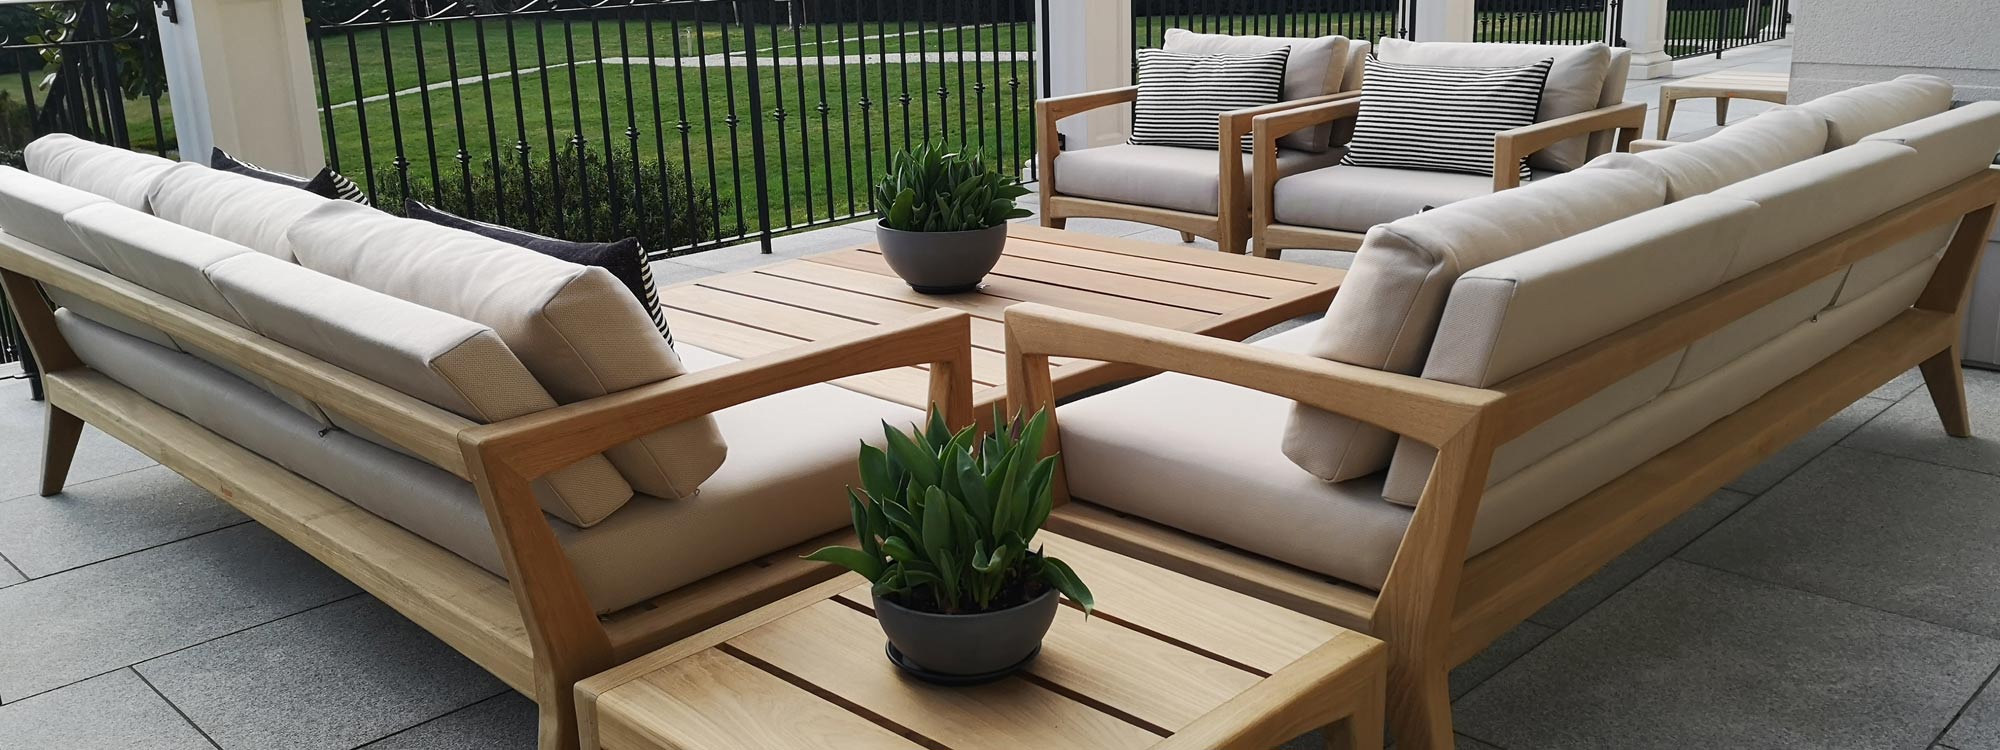 Zenhit modern garden furniture by Royal Botania in Ascot, Berkshire